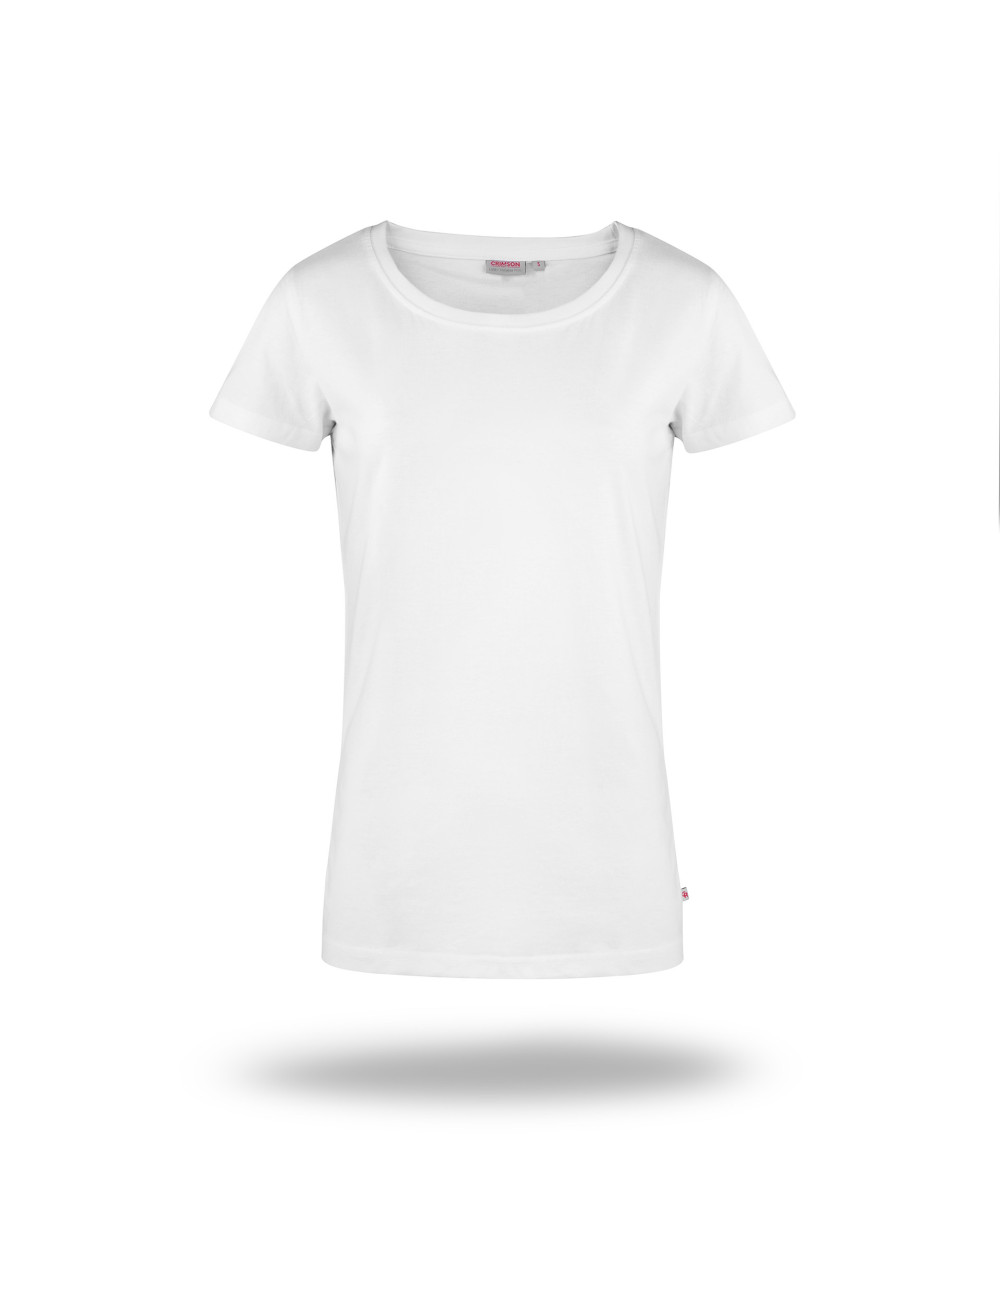 Koszulka damska ladies' premium plus biały Crimson Cut